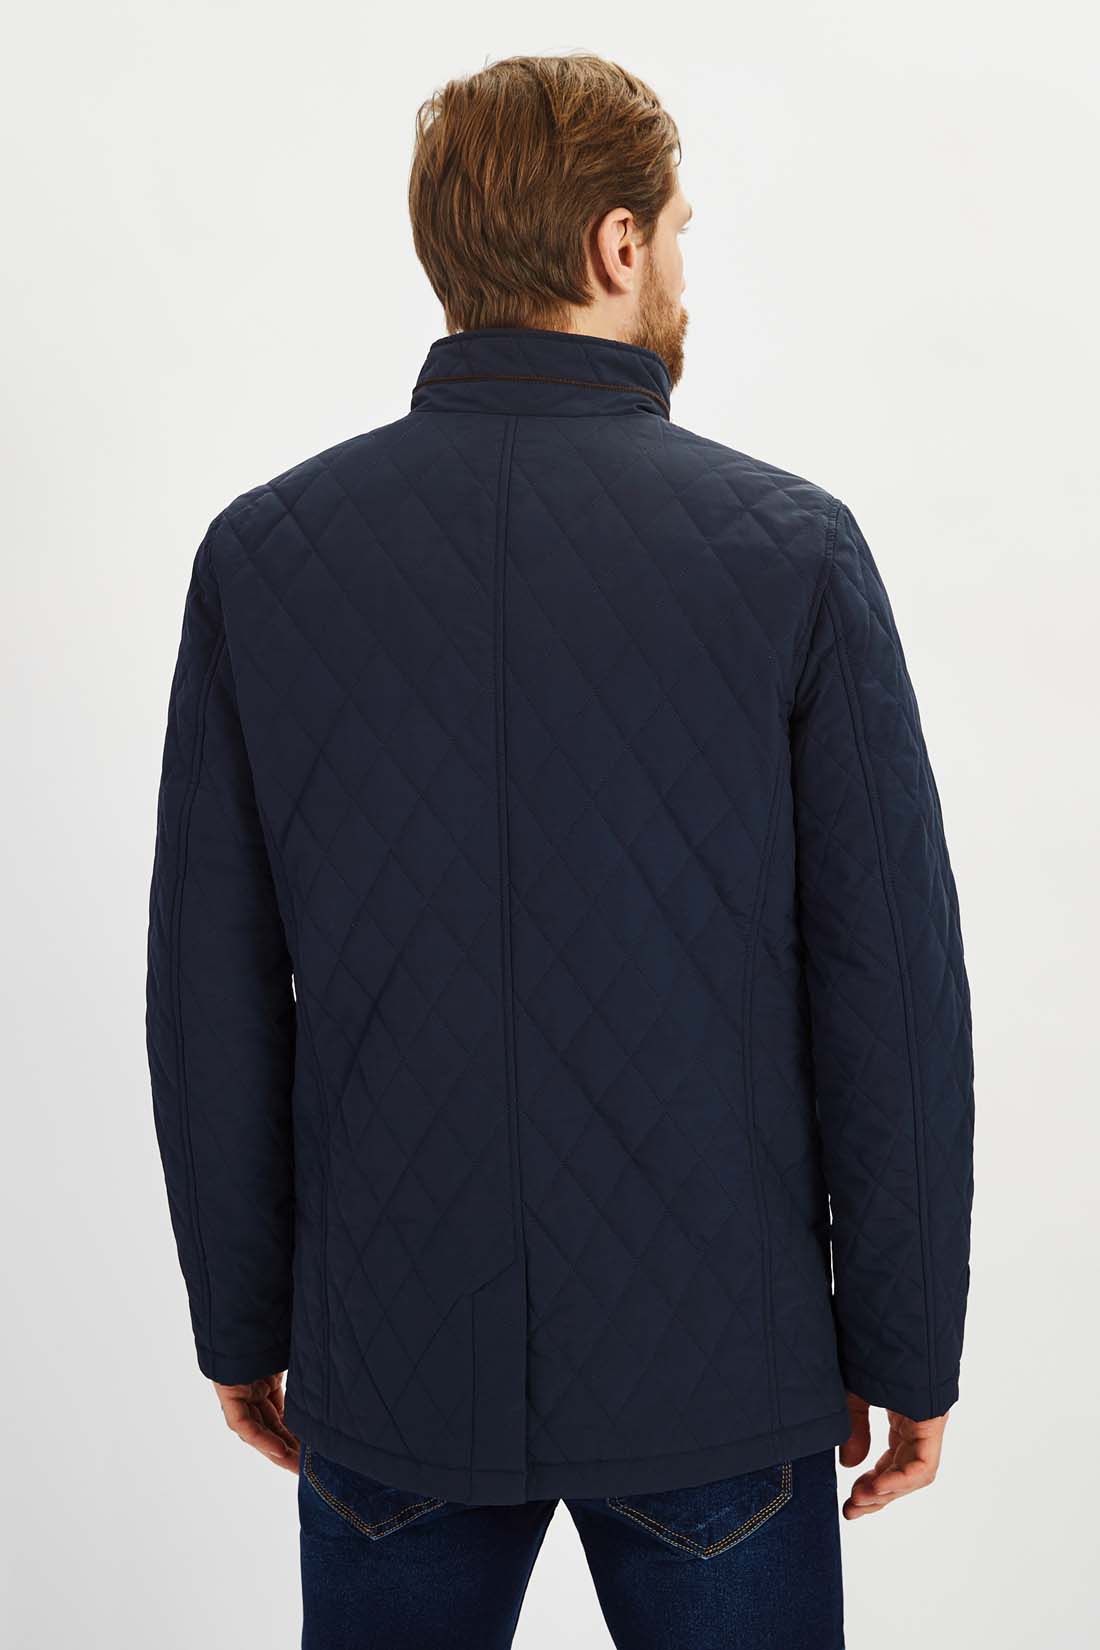 Куртка (арт. baon B531503), размер M, цвет синий Куртка (арт. baon B531503) - фото 2